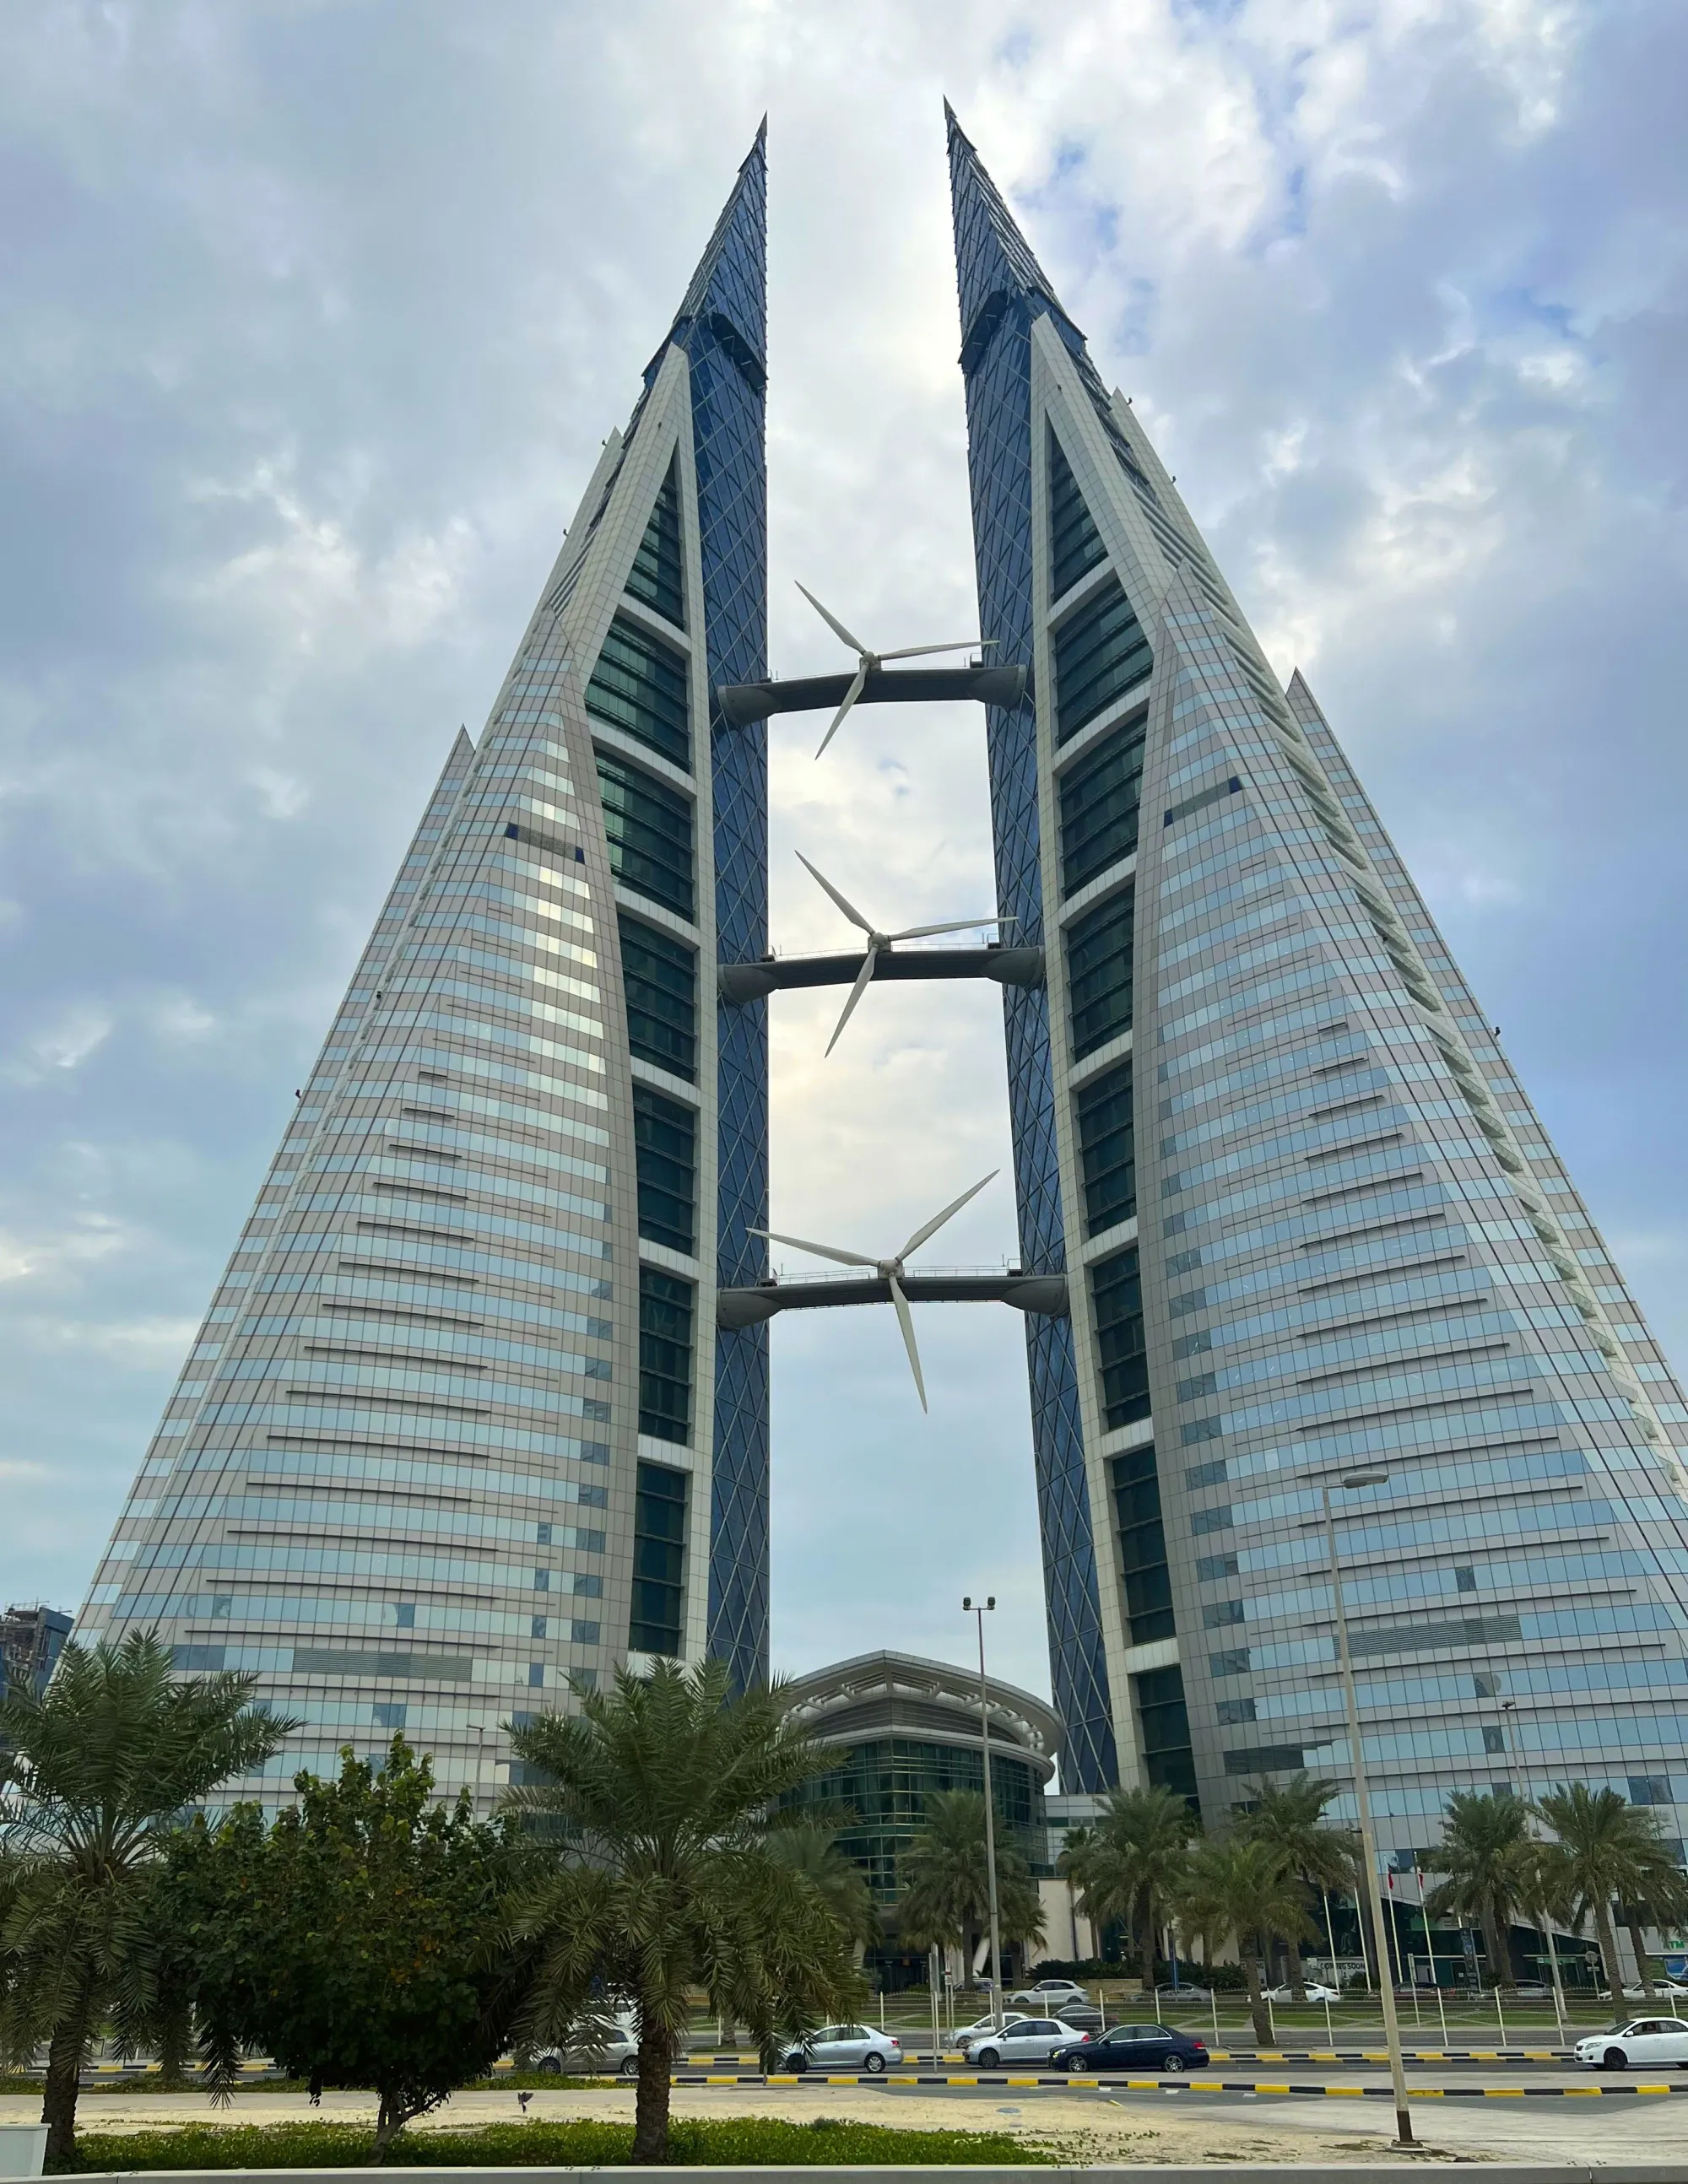 Glass skyscraper designed in two triangular halves with bridges running between them